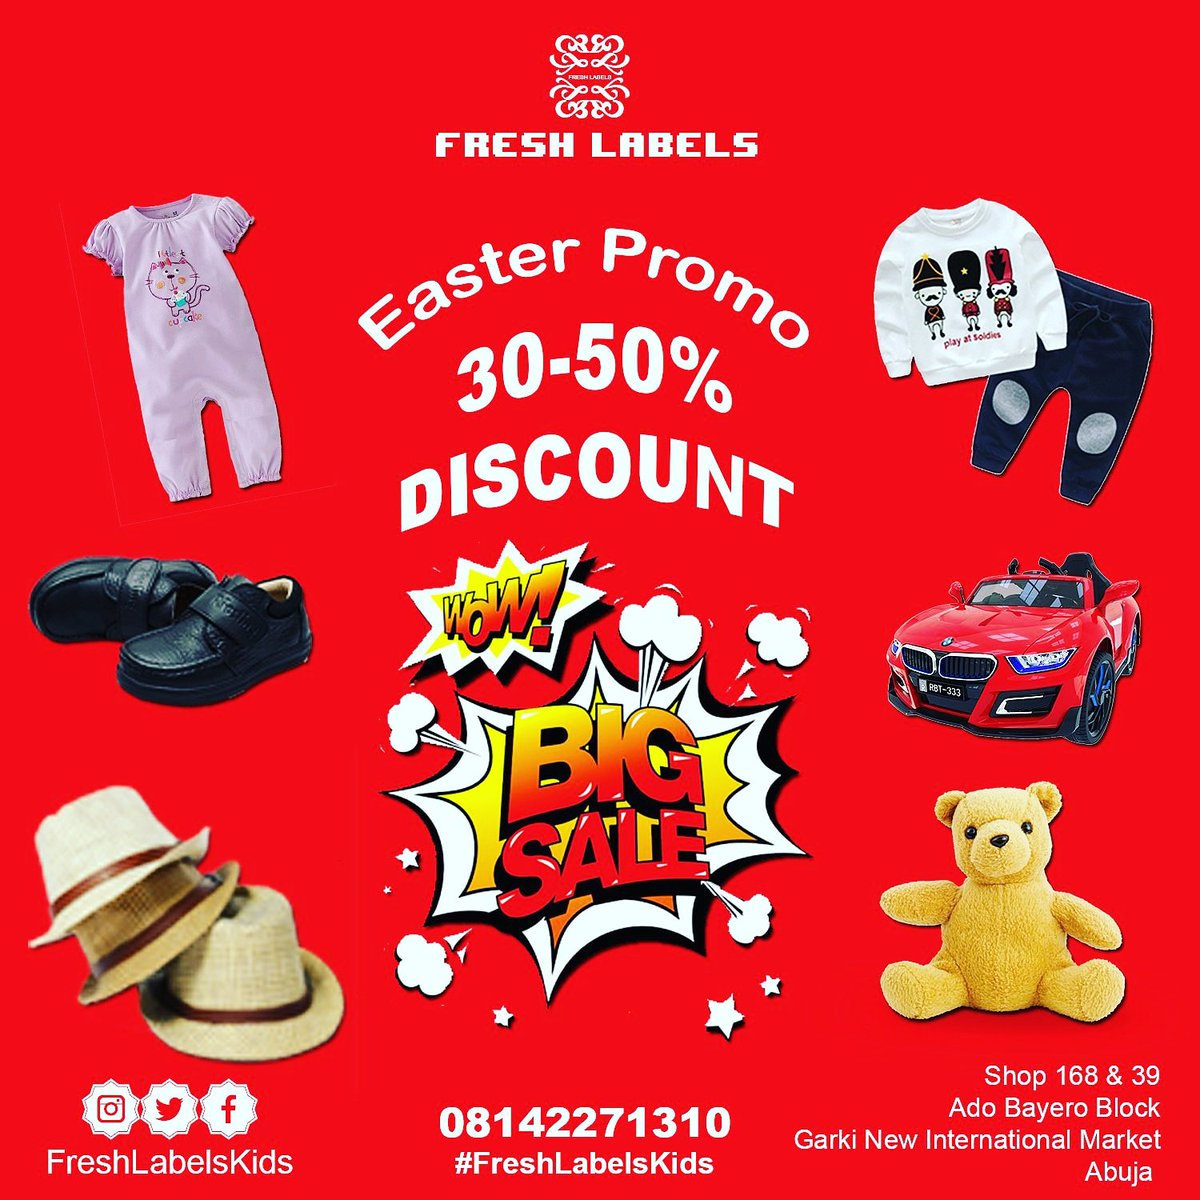 #FreshLabelsKids is your #1 Children Stores where you get everything for your kids.
#Abujatwittercommunity 
#AbujaPlayground 
#SocialAbujaMarket 
#Children 
#ChildrenWears